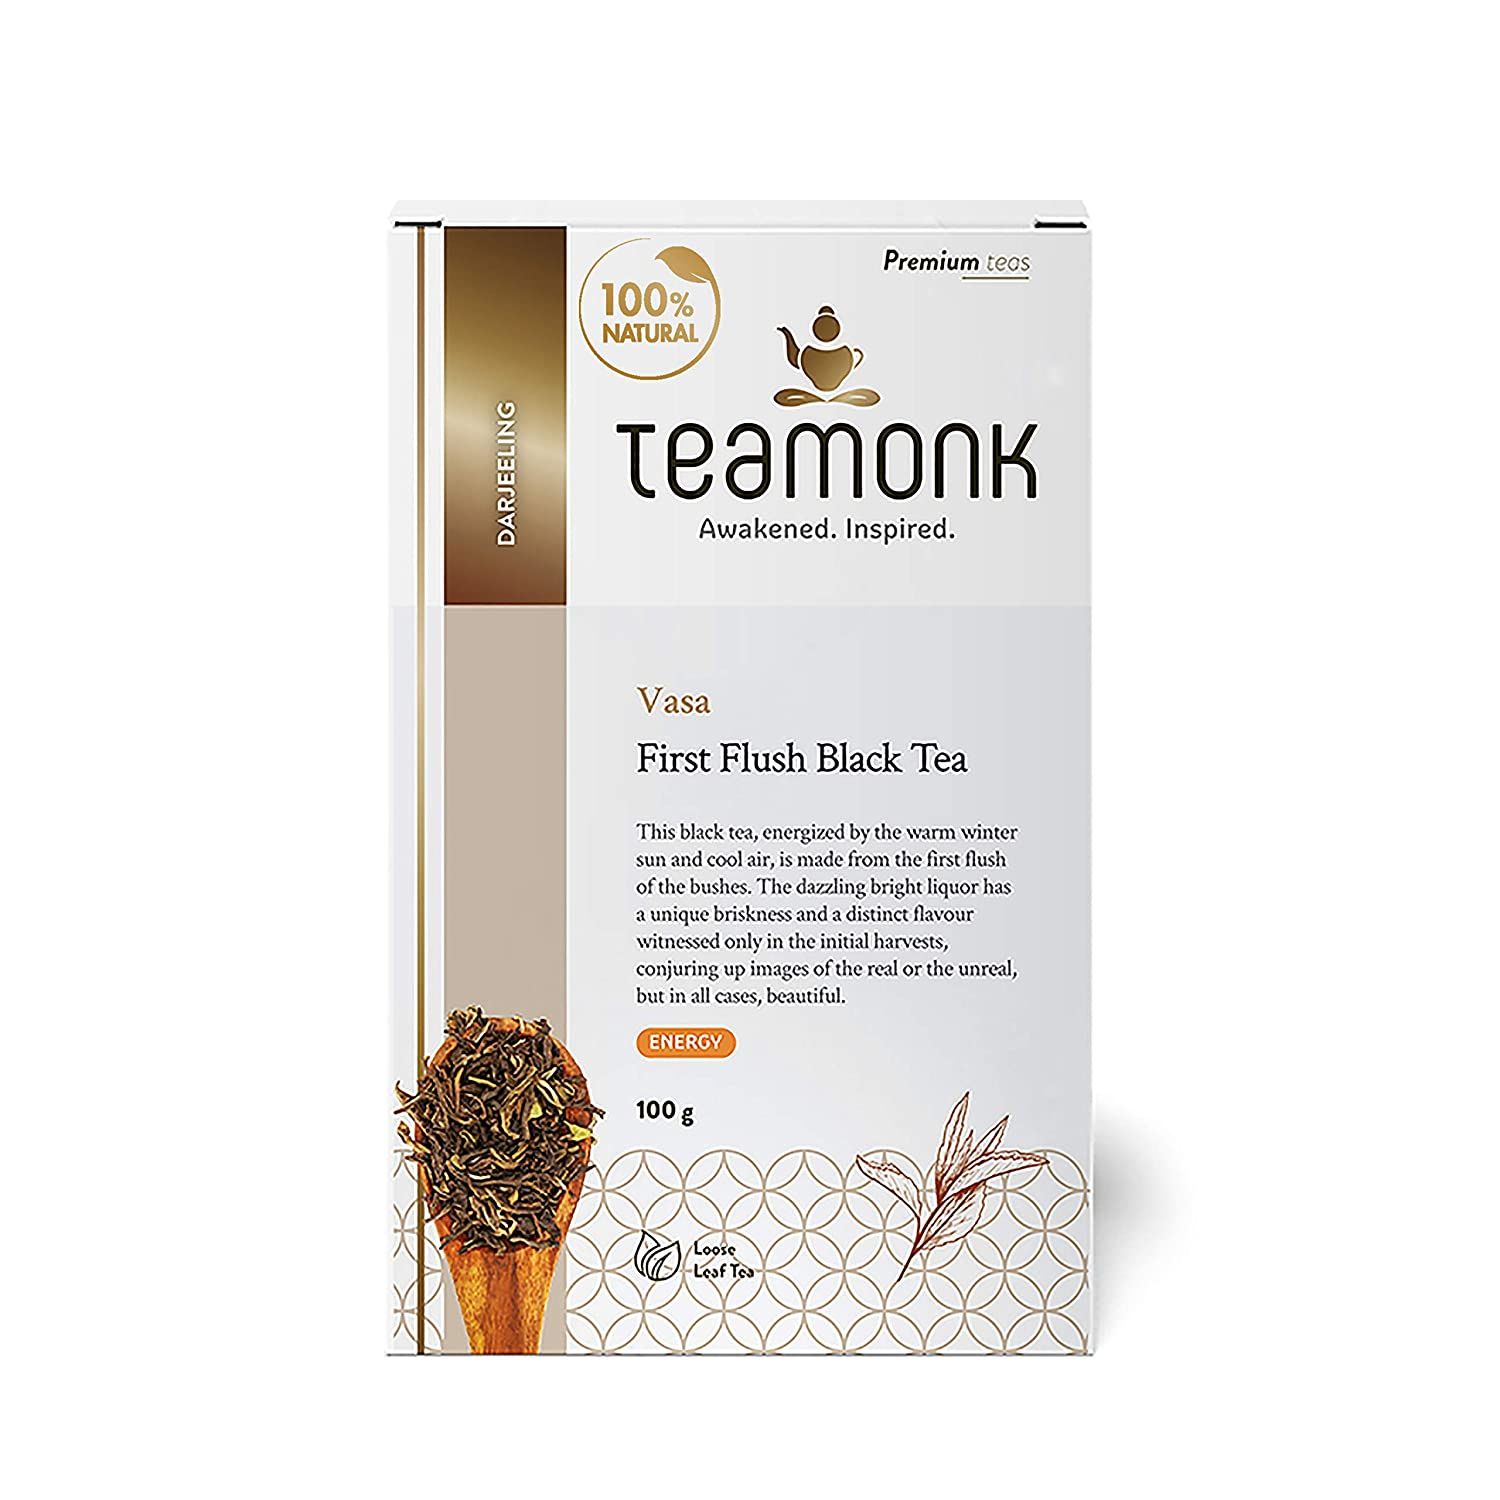 Teamonk First Flush Black Tea Image